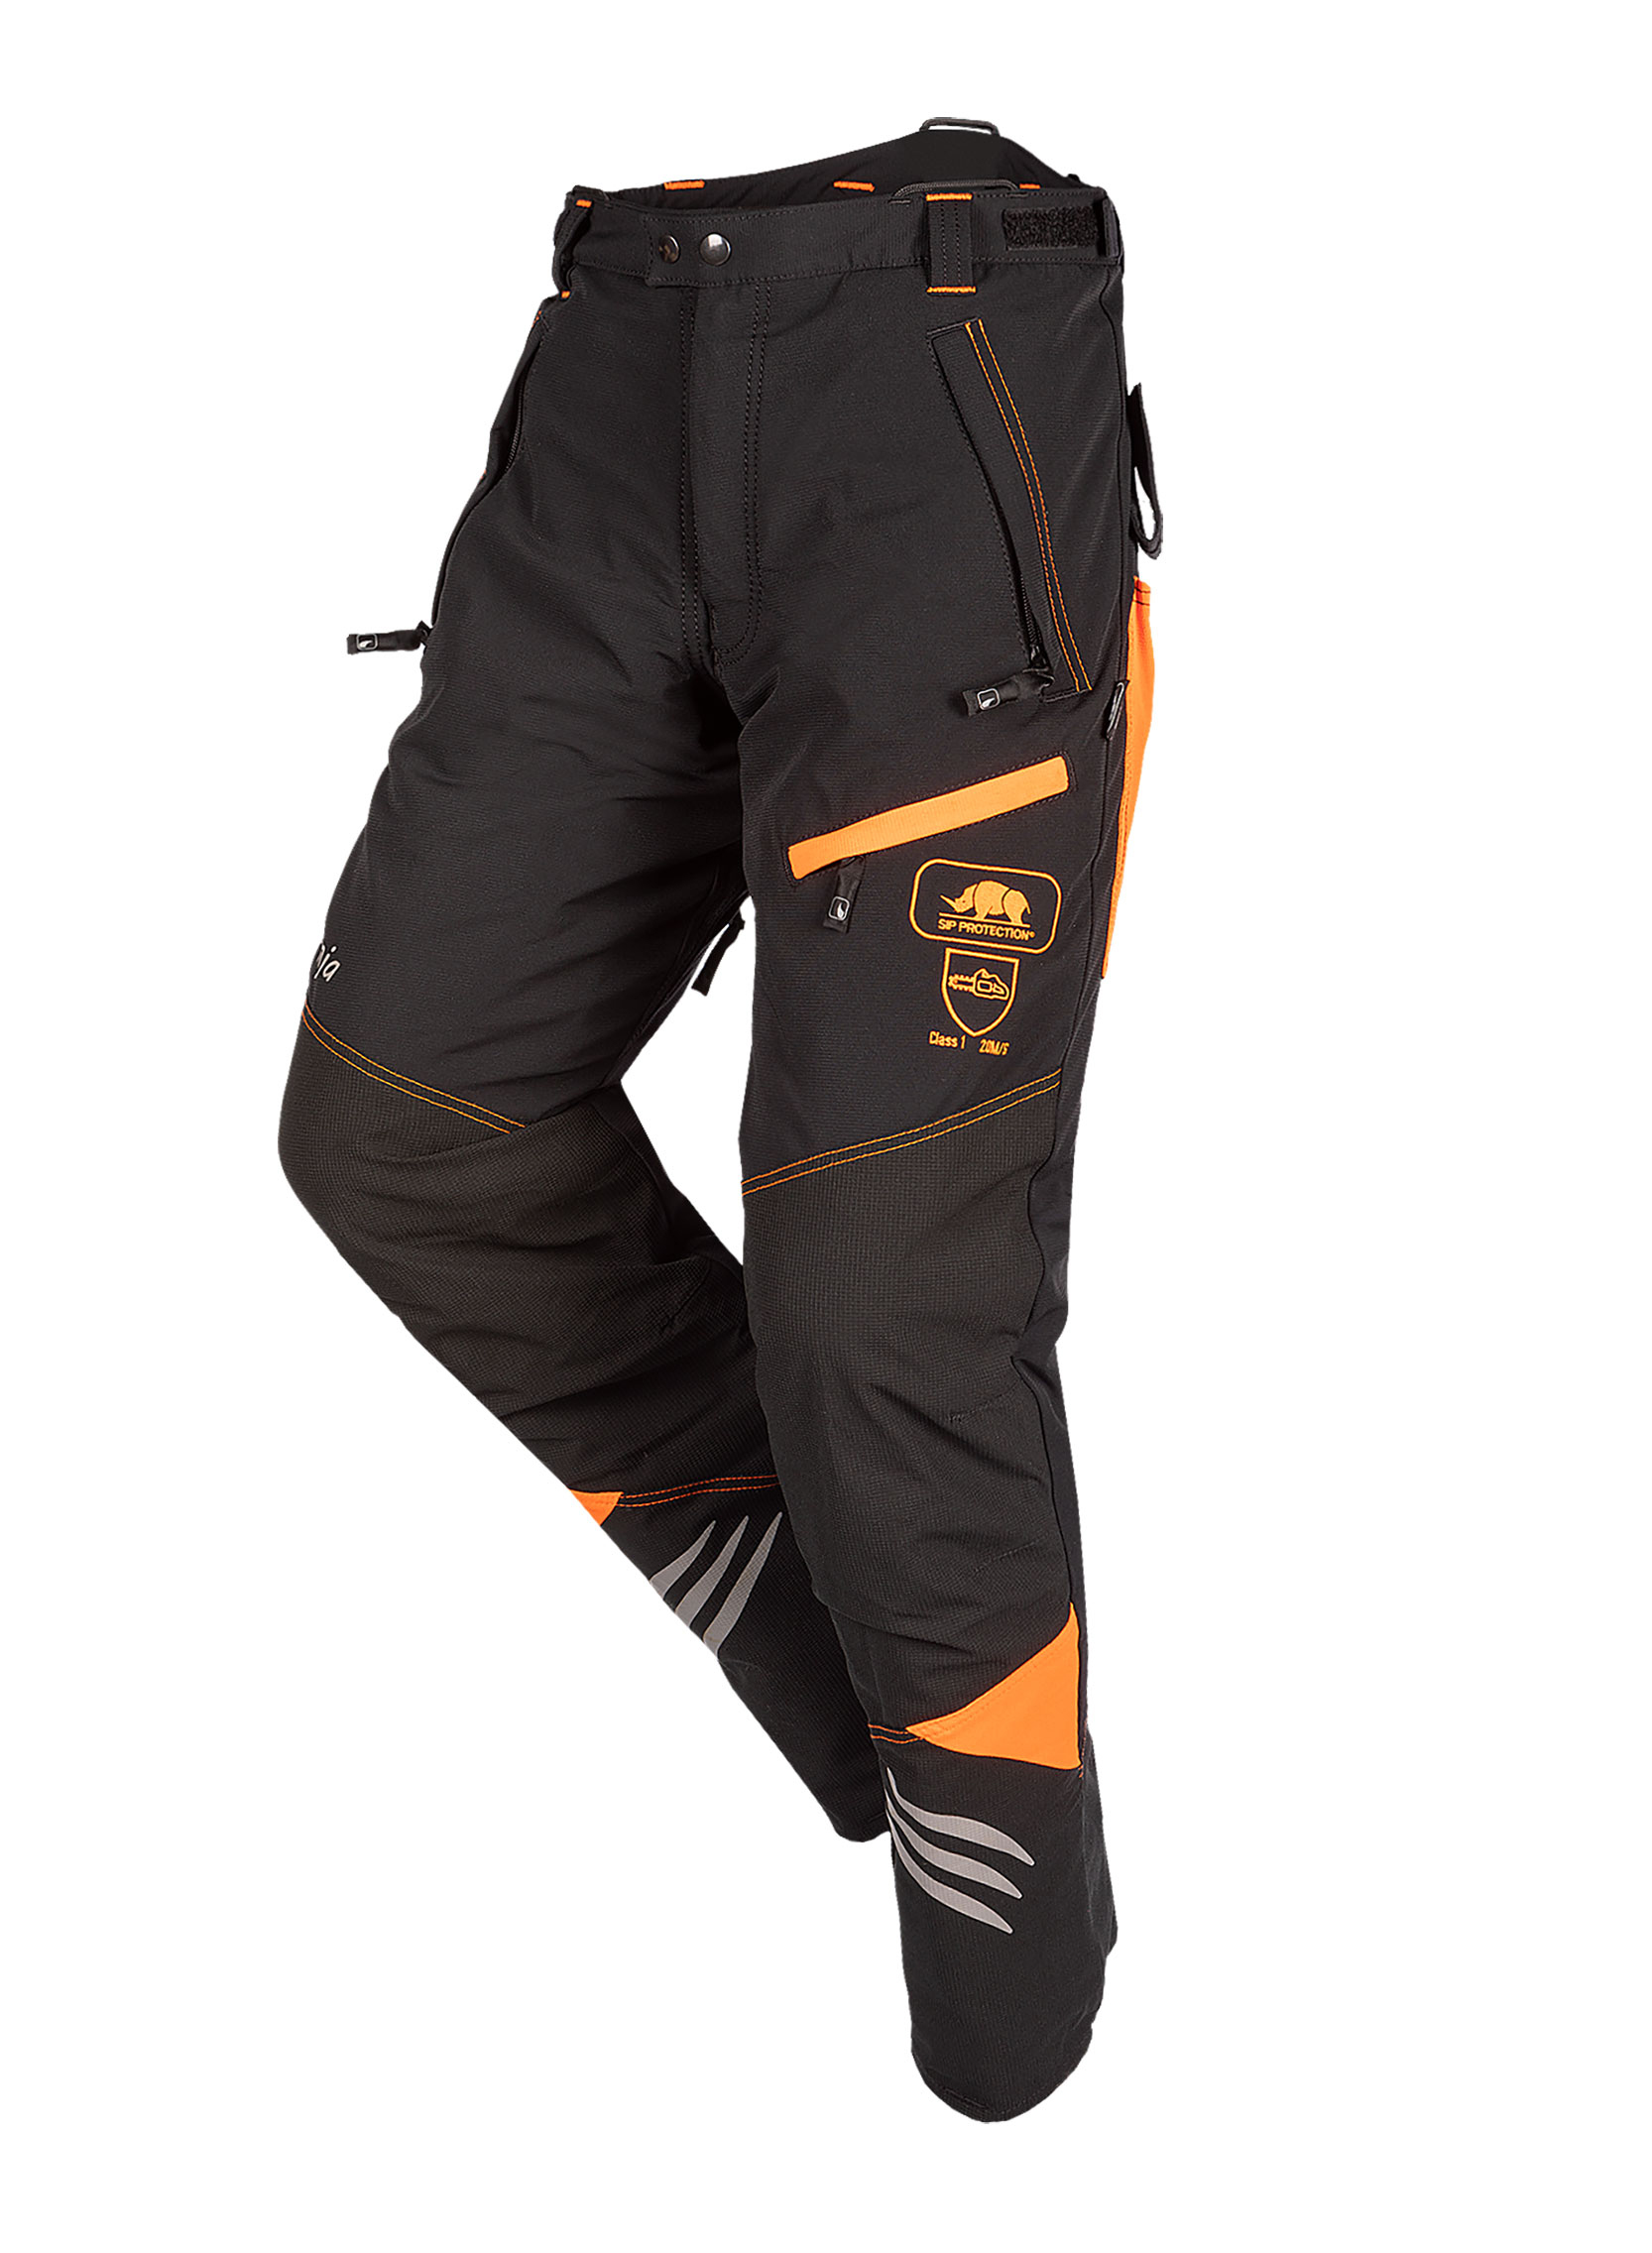 Zaagbroek Sip Protection Ninja zwart/oranje